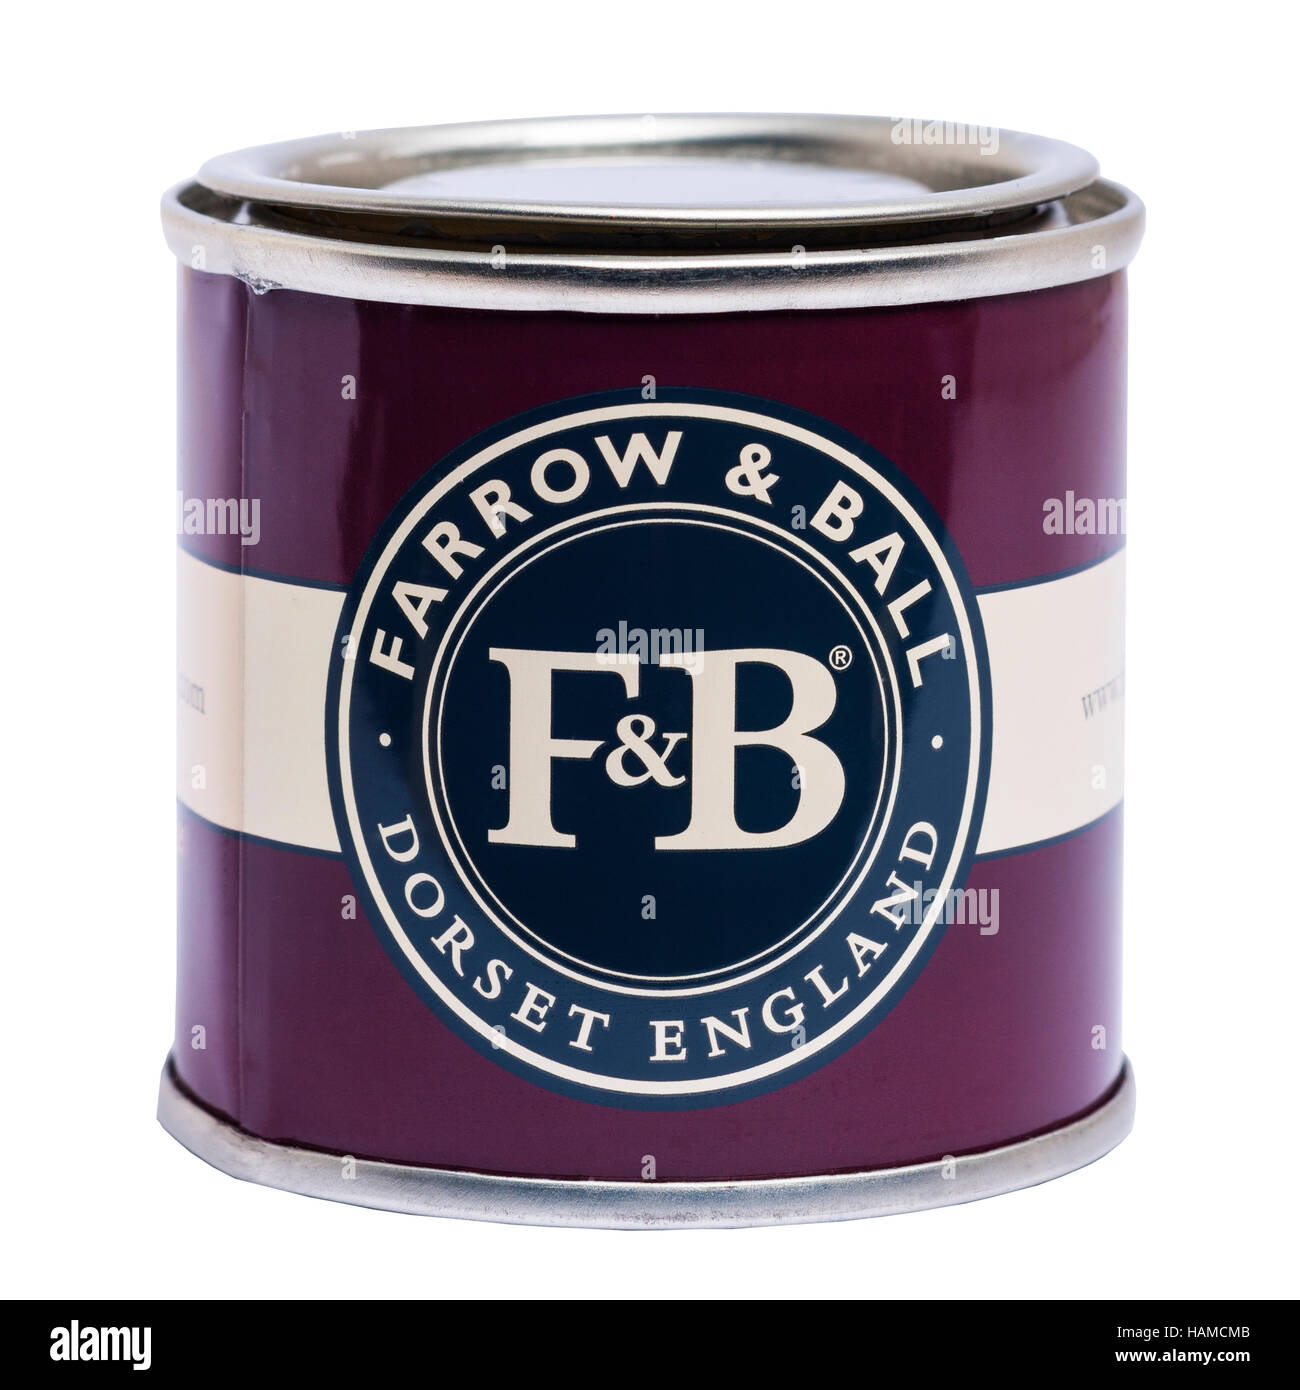 A tin of Farrow & Ball paint on a white background Stock Photo